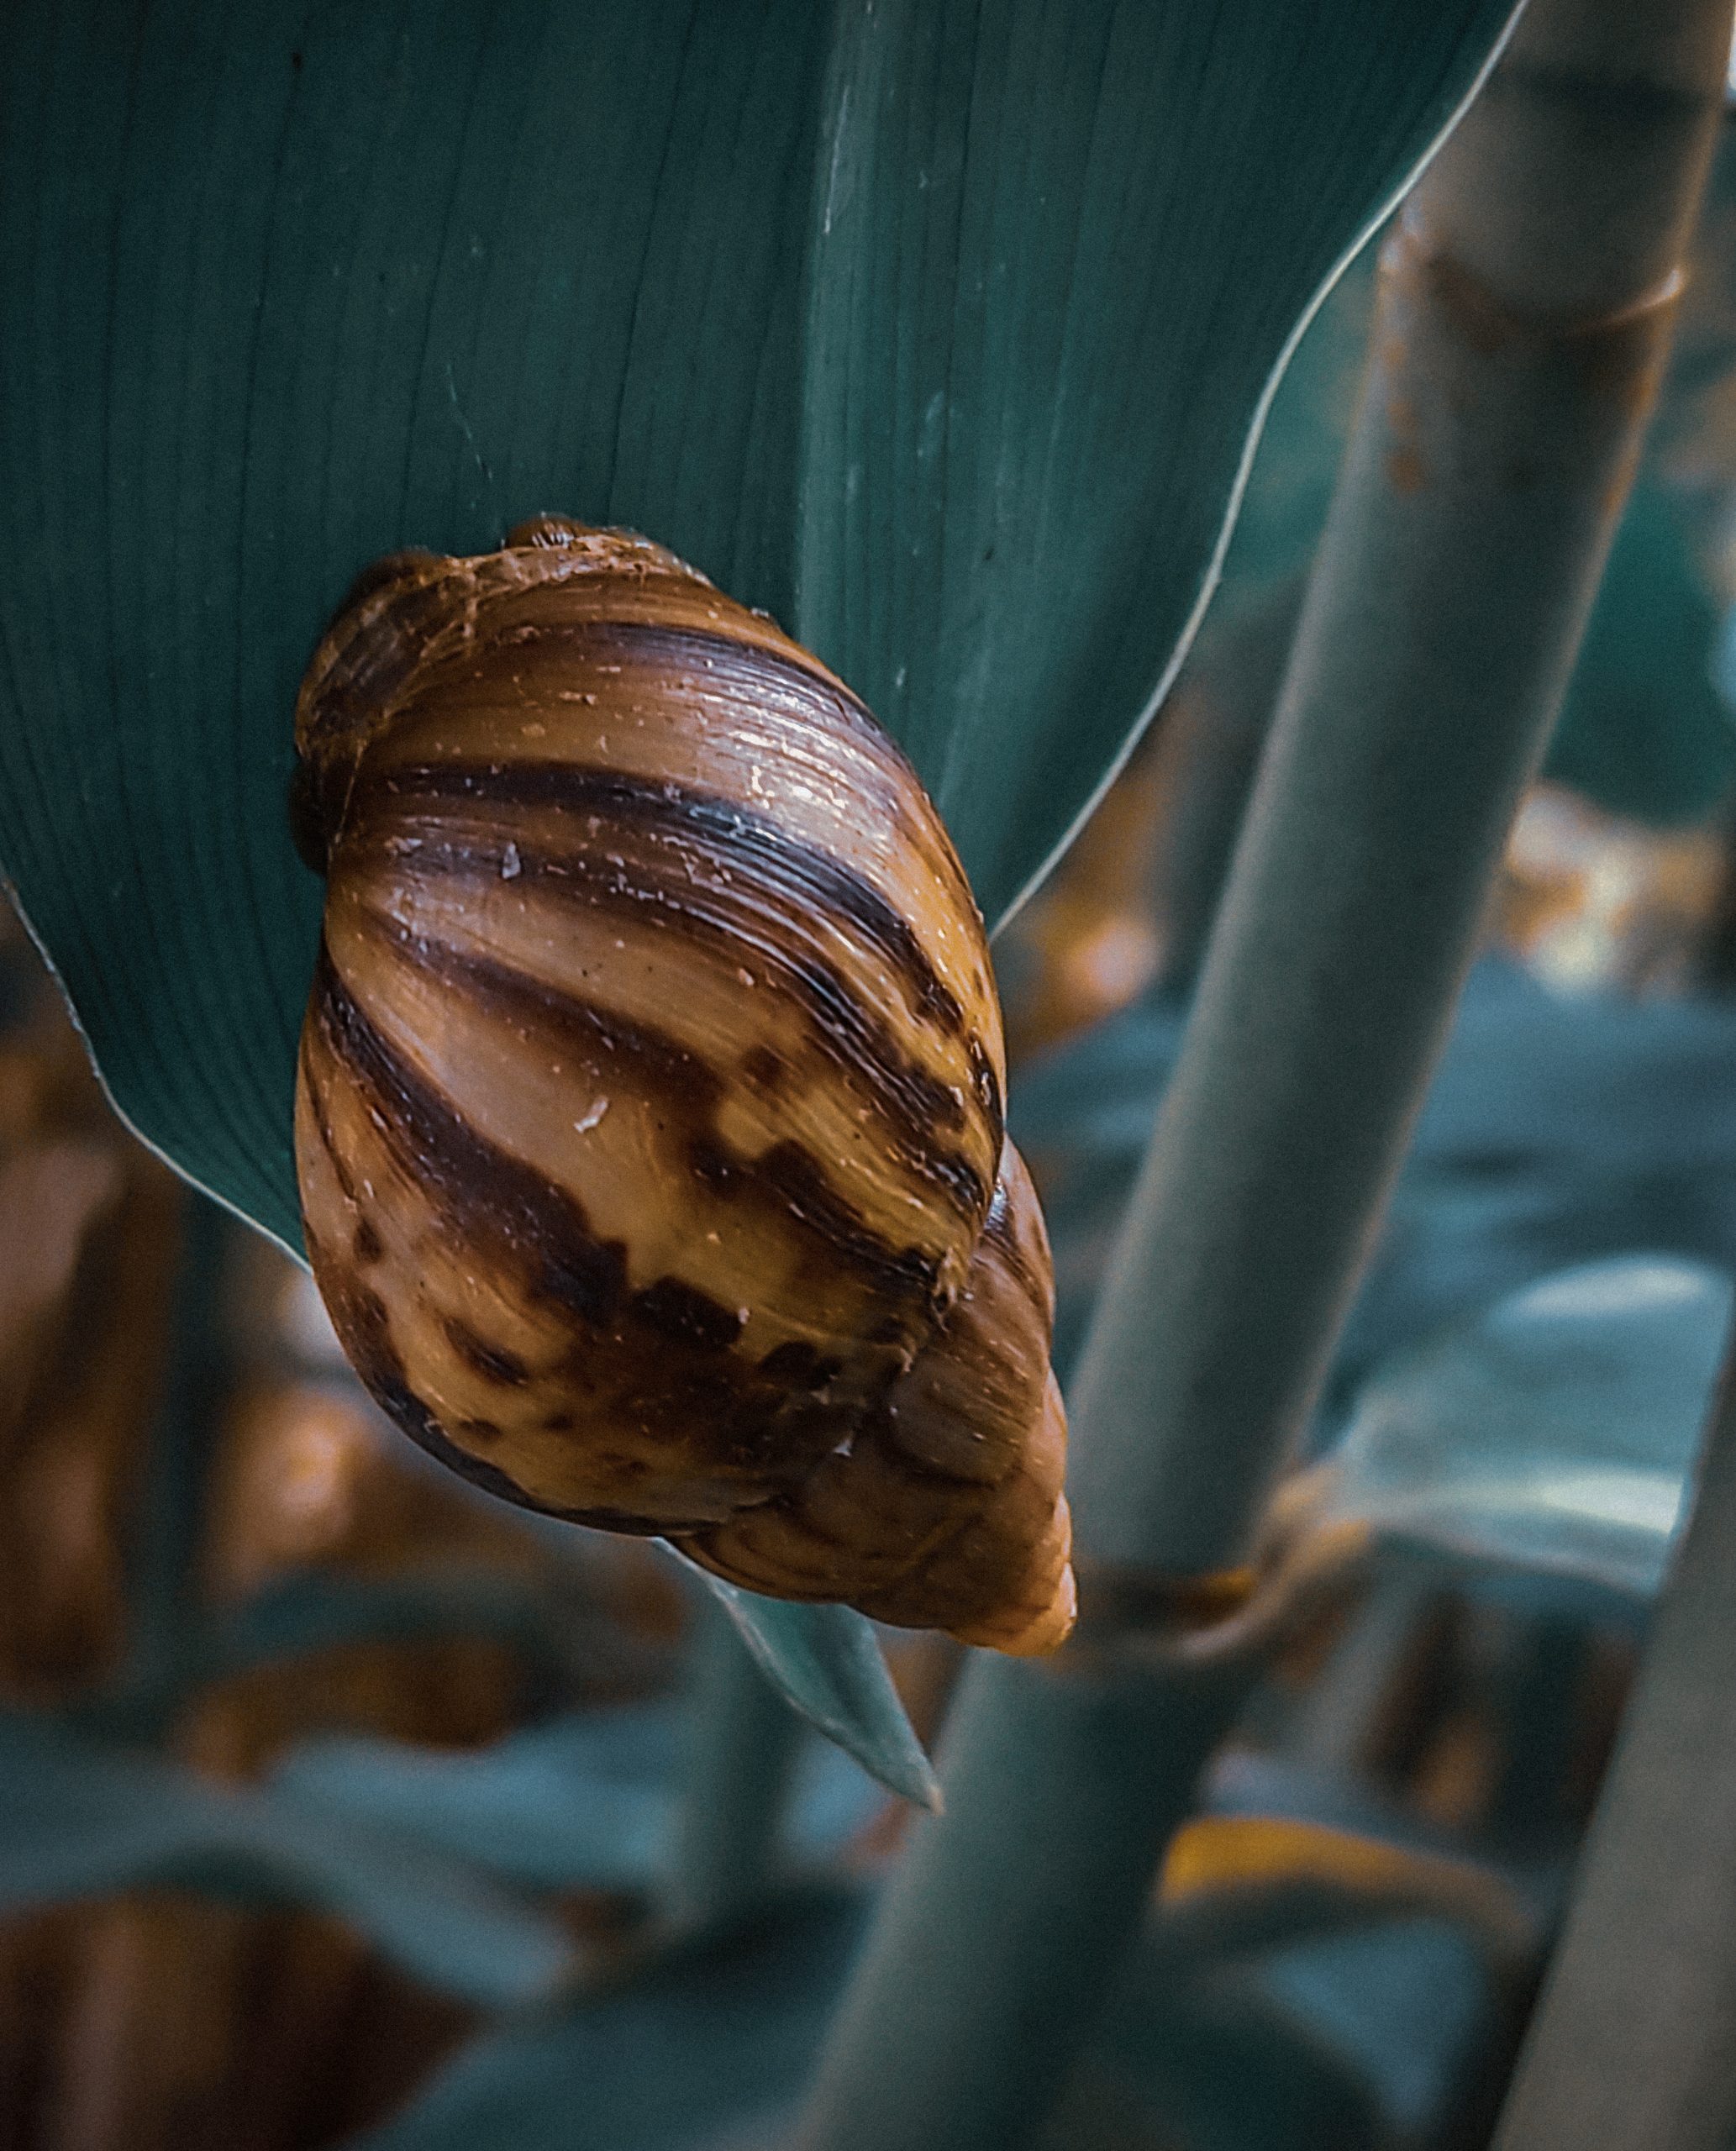 A snail on a leaf